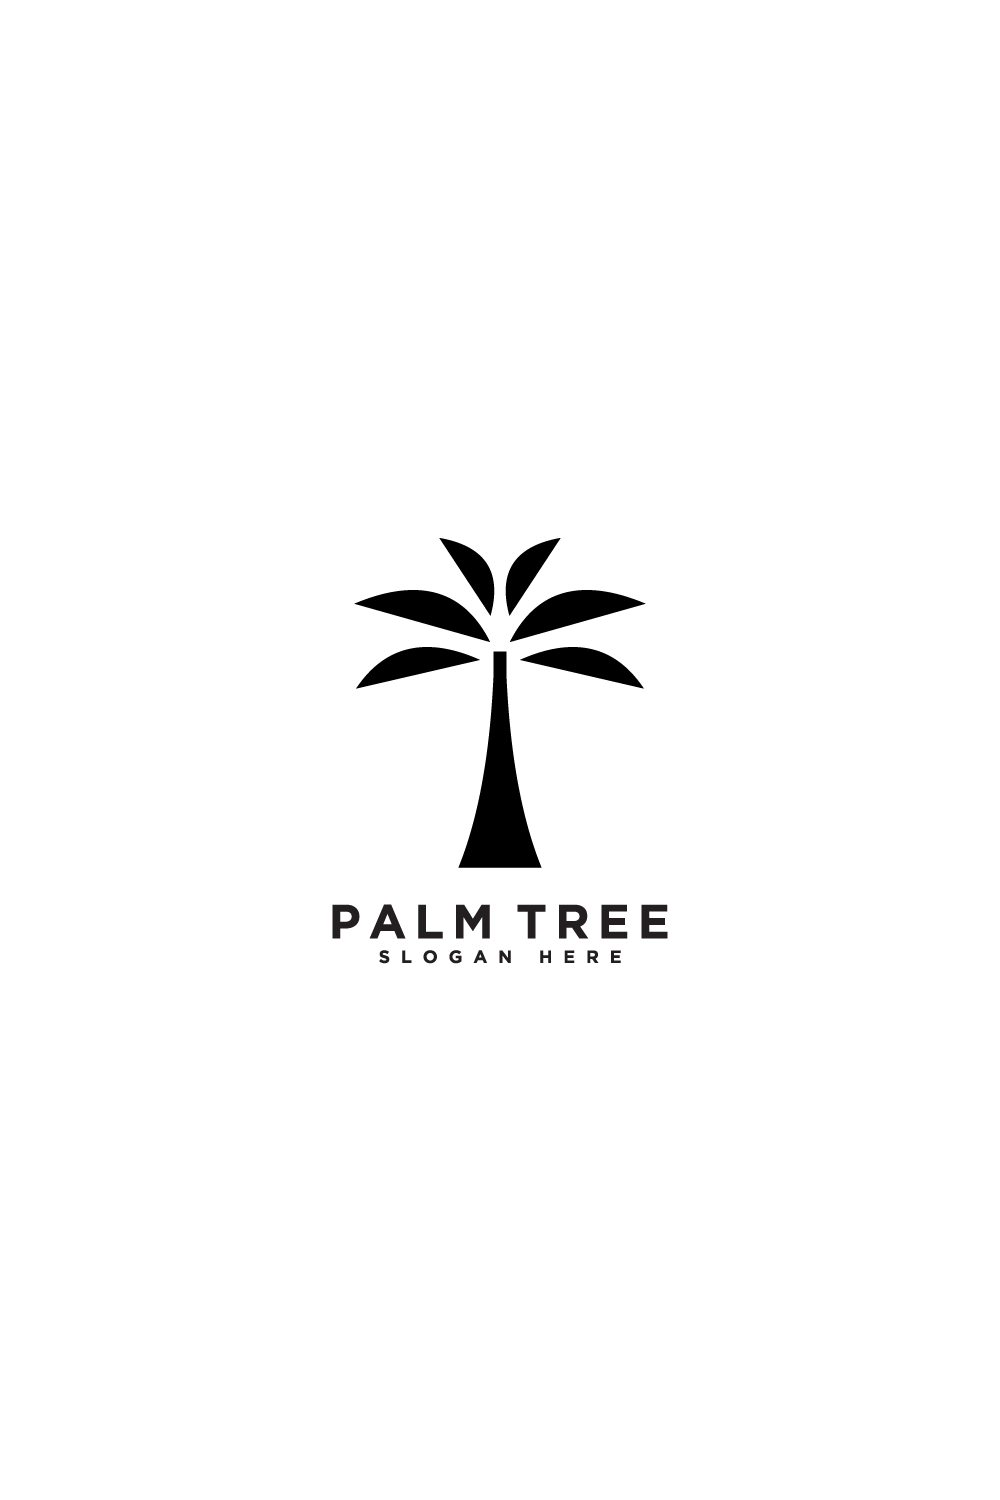 palm tree logo pinterest preview image.